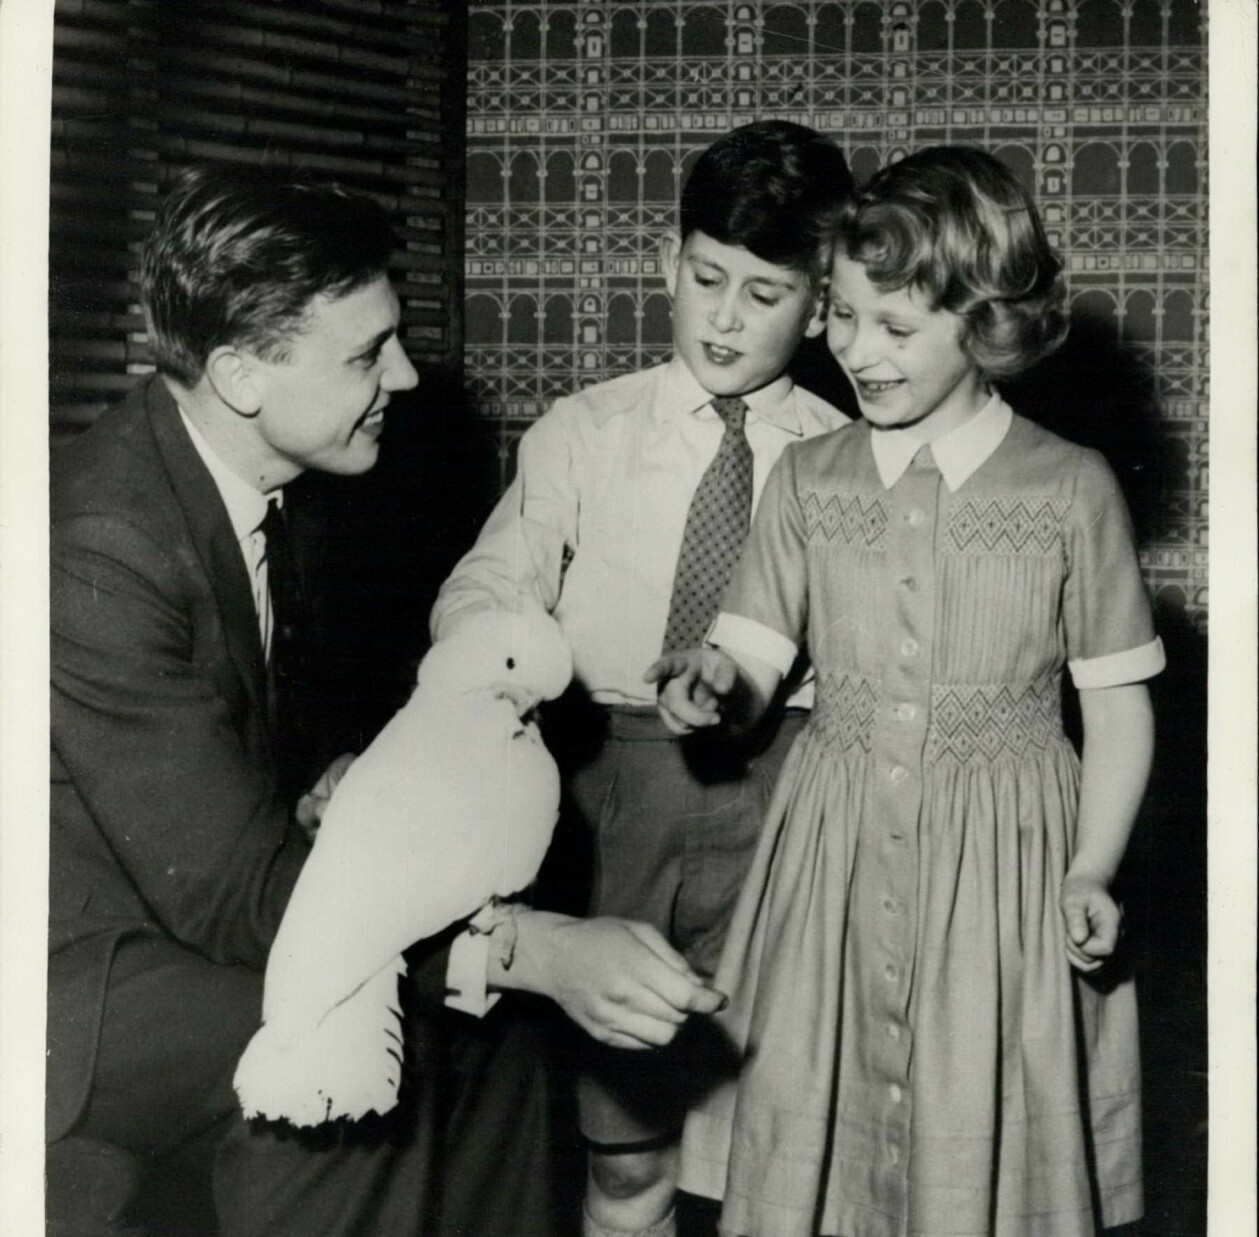 David Attenborough, prins Charles och prinsessan Anne 1958.